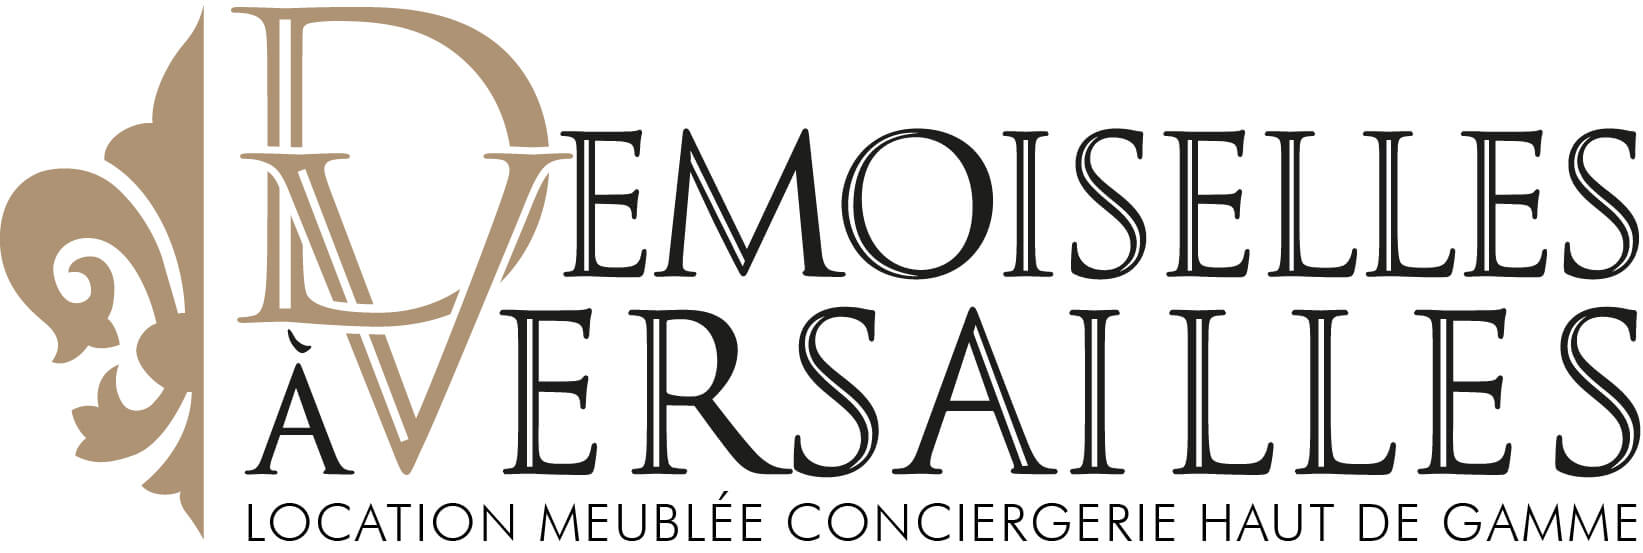 Logo-LES DEMOISELLES A VERSAILLES